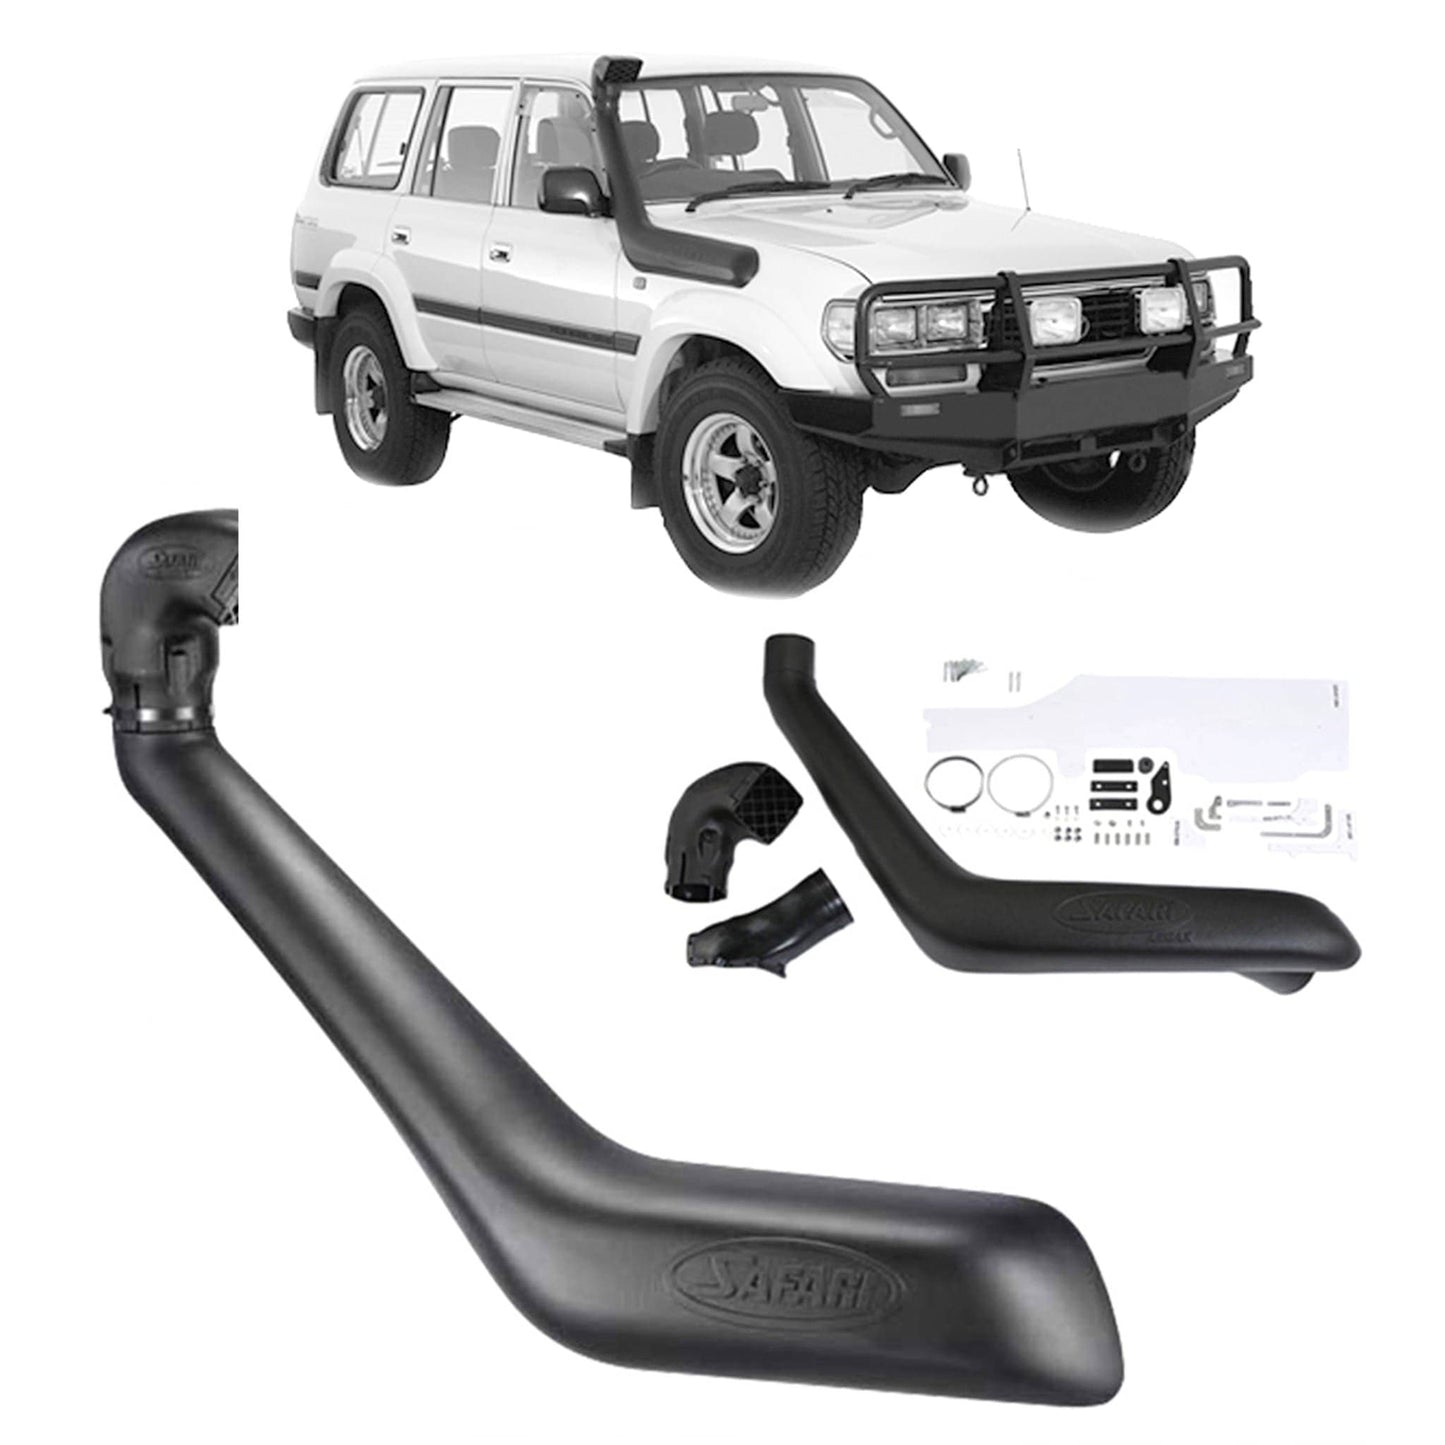 Safari Snorkel for Toyota Landcruiser (01/1987 - 02/1998)